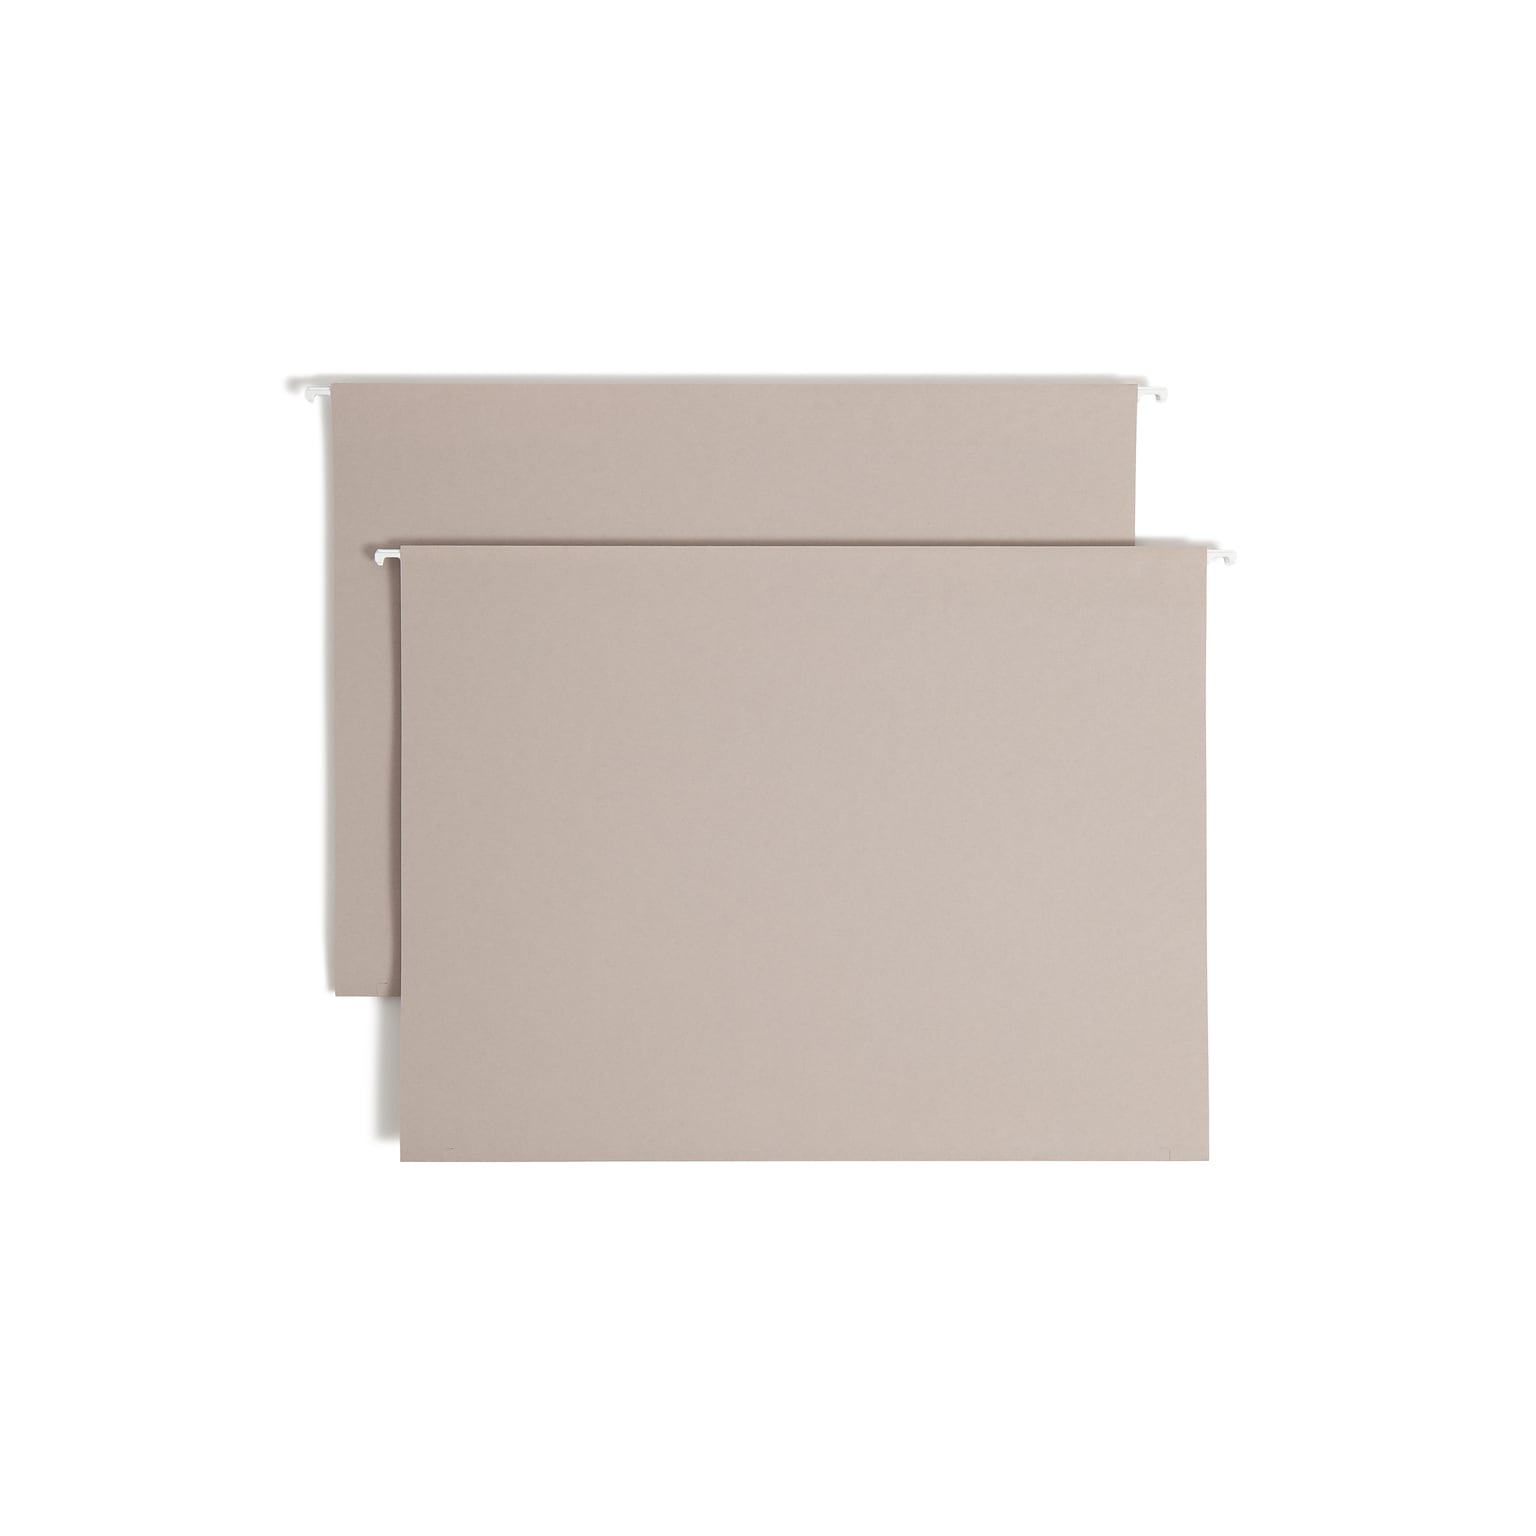 Smead Heavy Duty TUFF Box Bottom Hanging File Folder, 4 Expansion, 1-Tab, Legal Size, Steel Gray, 18/Box (64342)